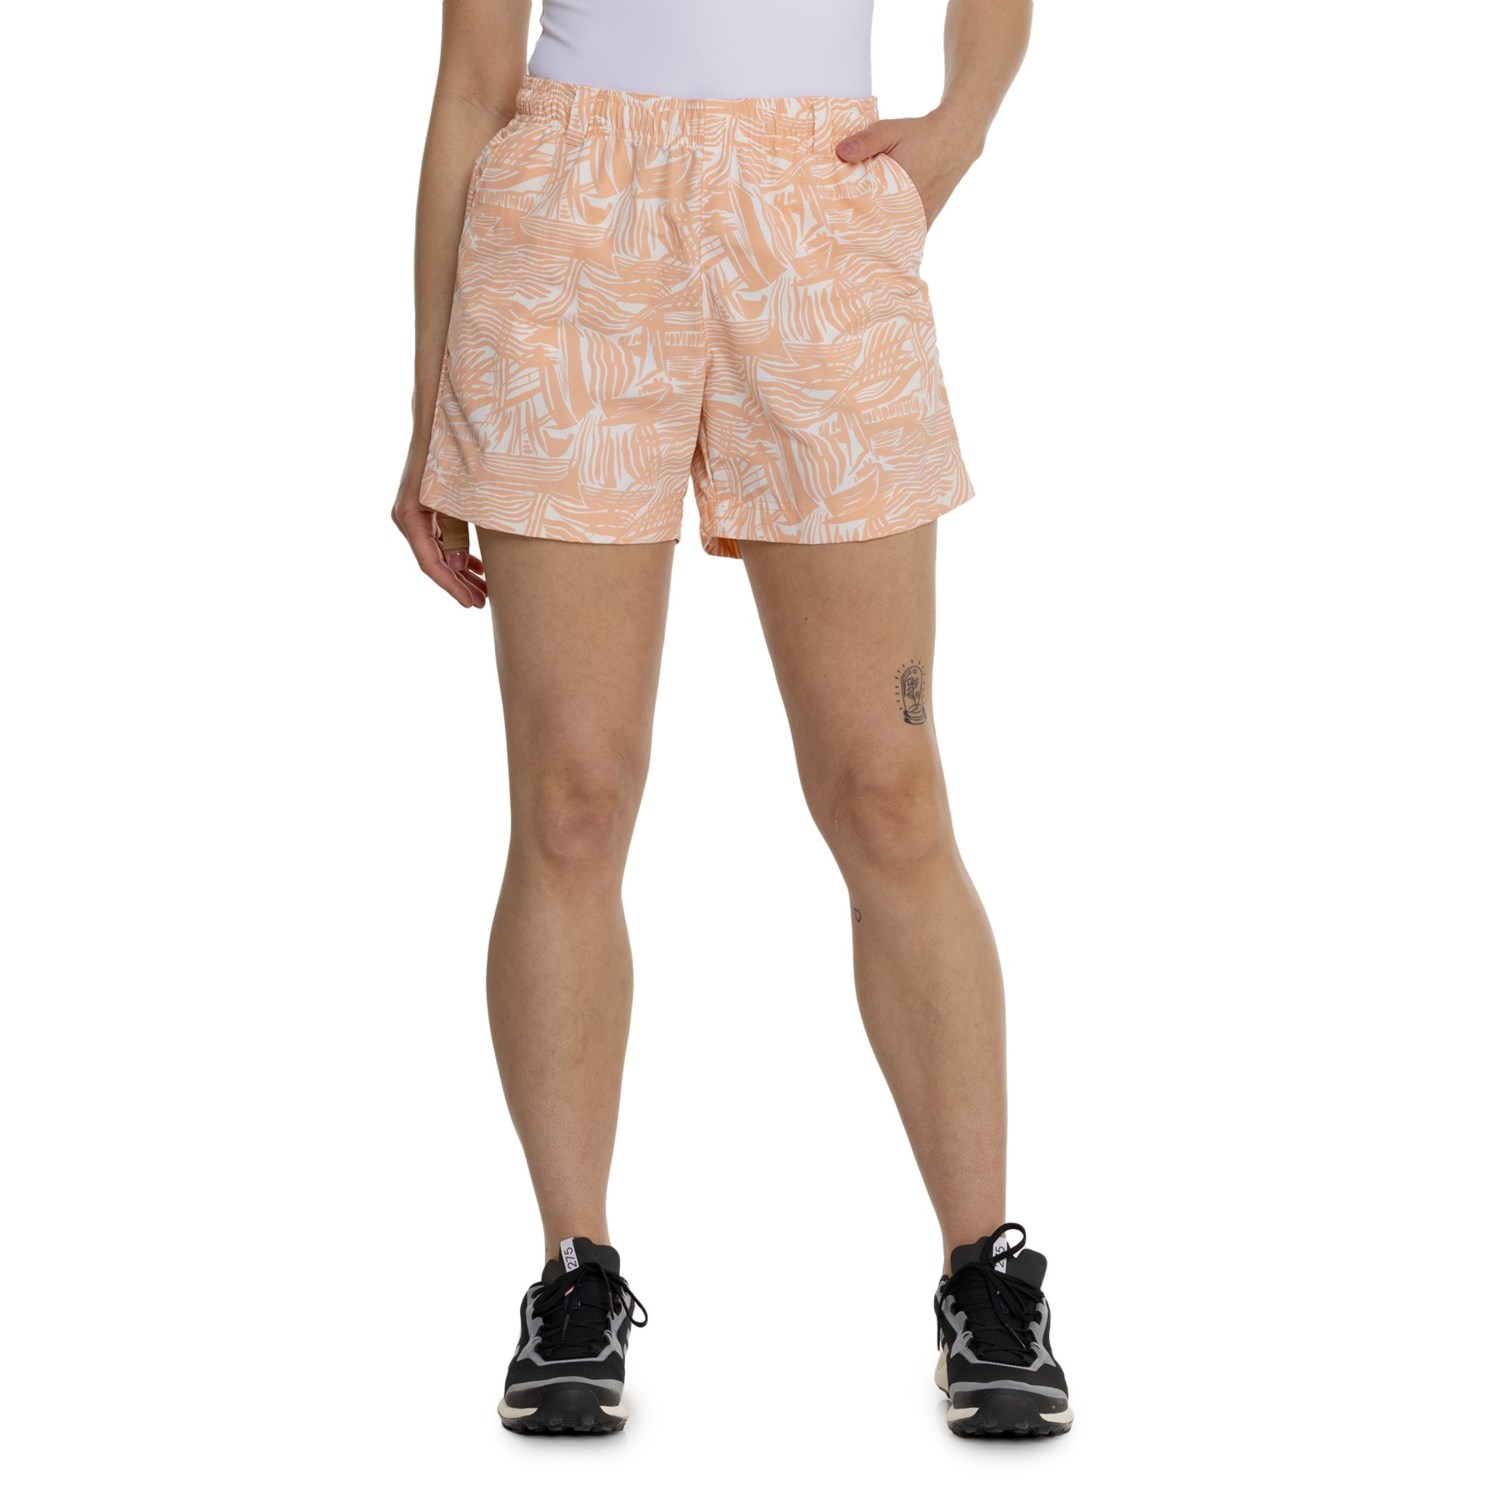 () RrAX|[cEFA X[p[ obNLXg EH[^[ V[c - Upf 50 Columbia Sportswear Super Backcast Water Shorts - UPF 50 Light Coral